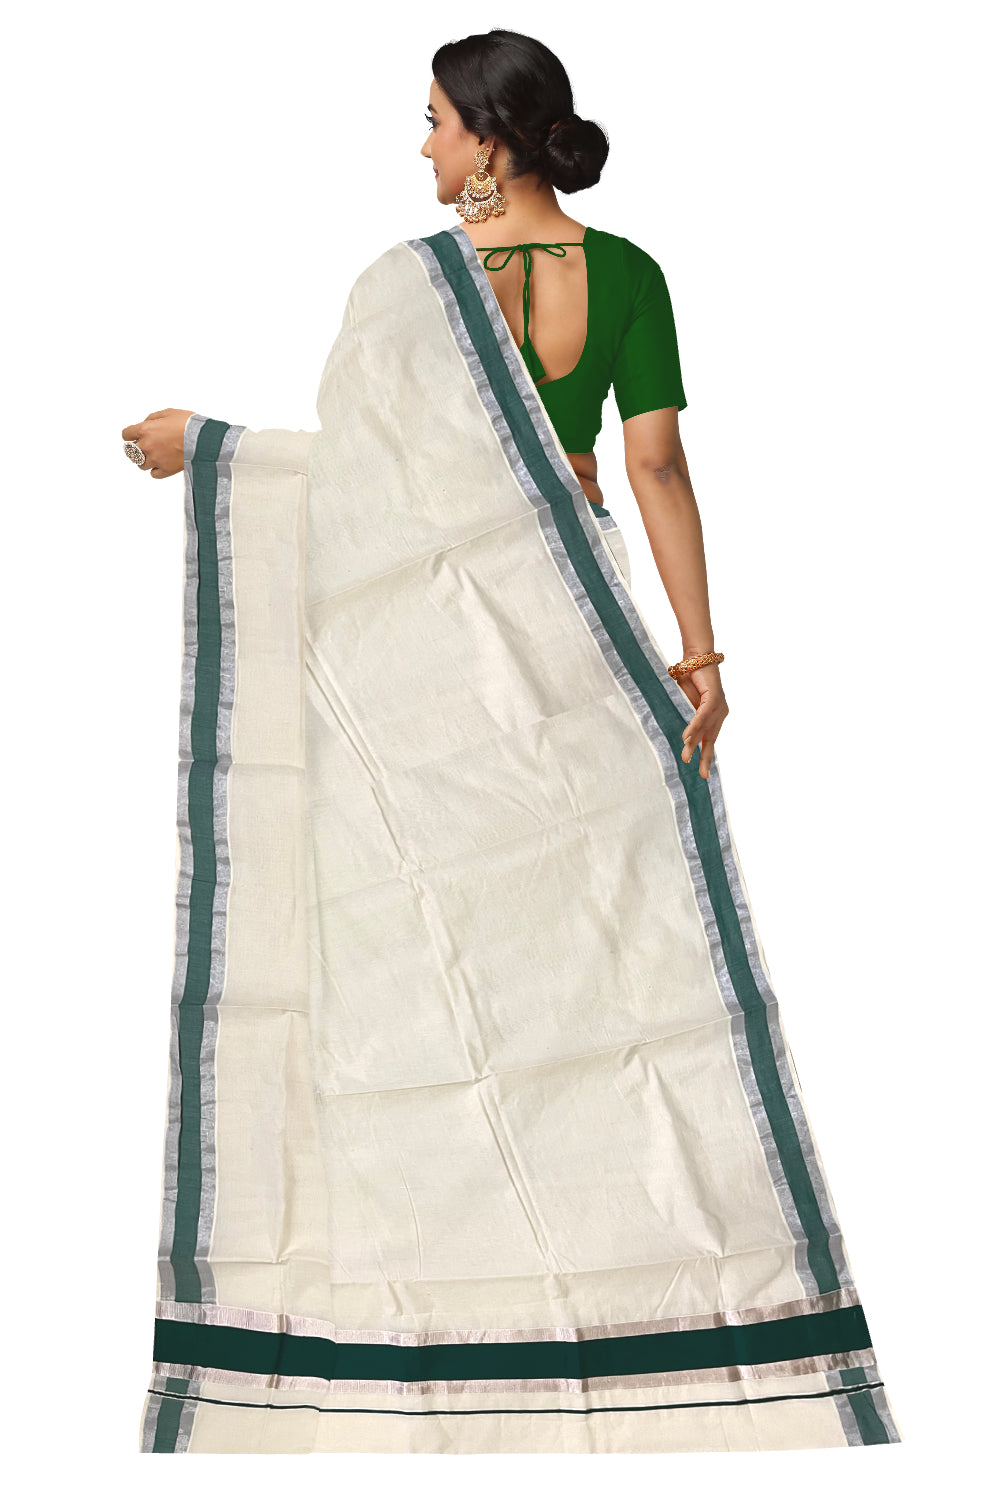 Pure Cotton Kerala Saree with Green and Silver Kasavu Border